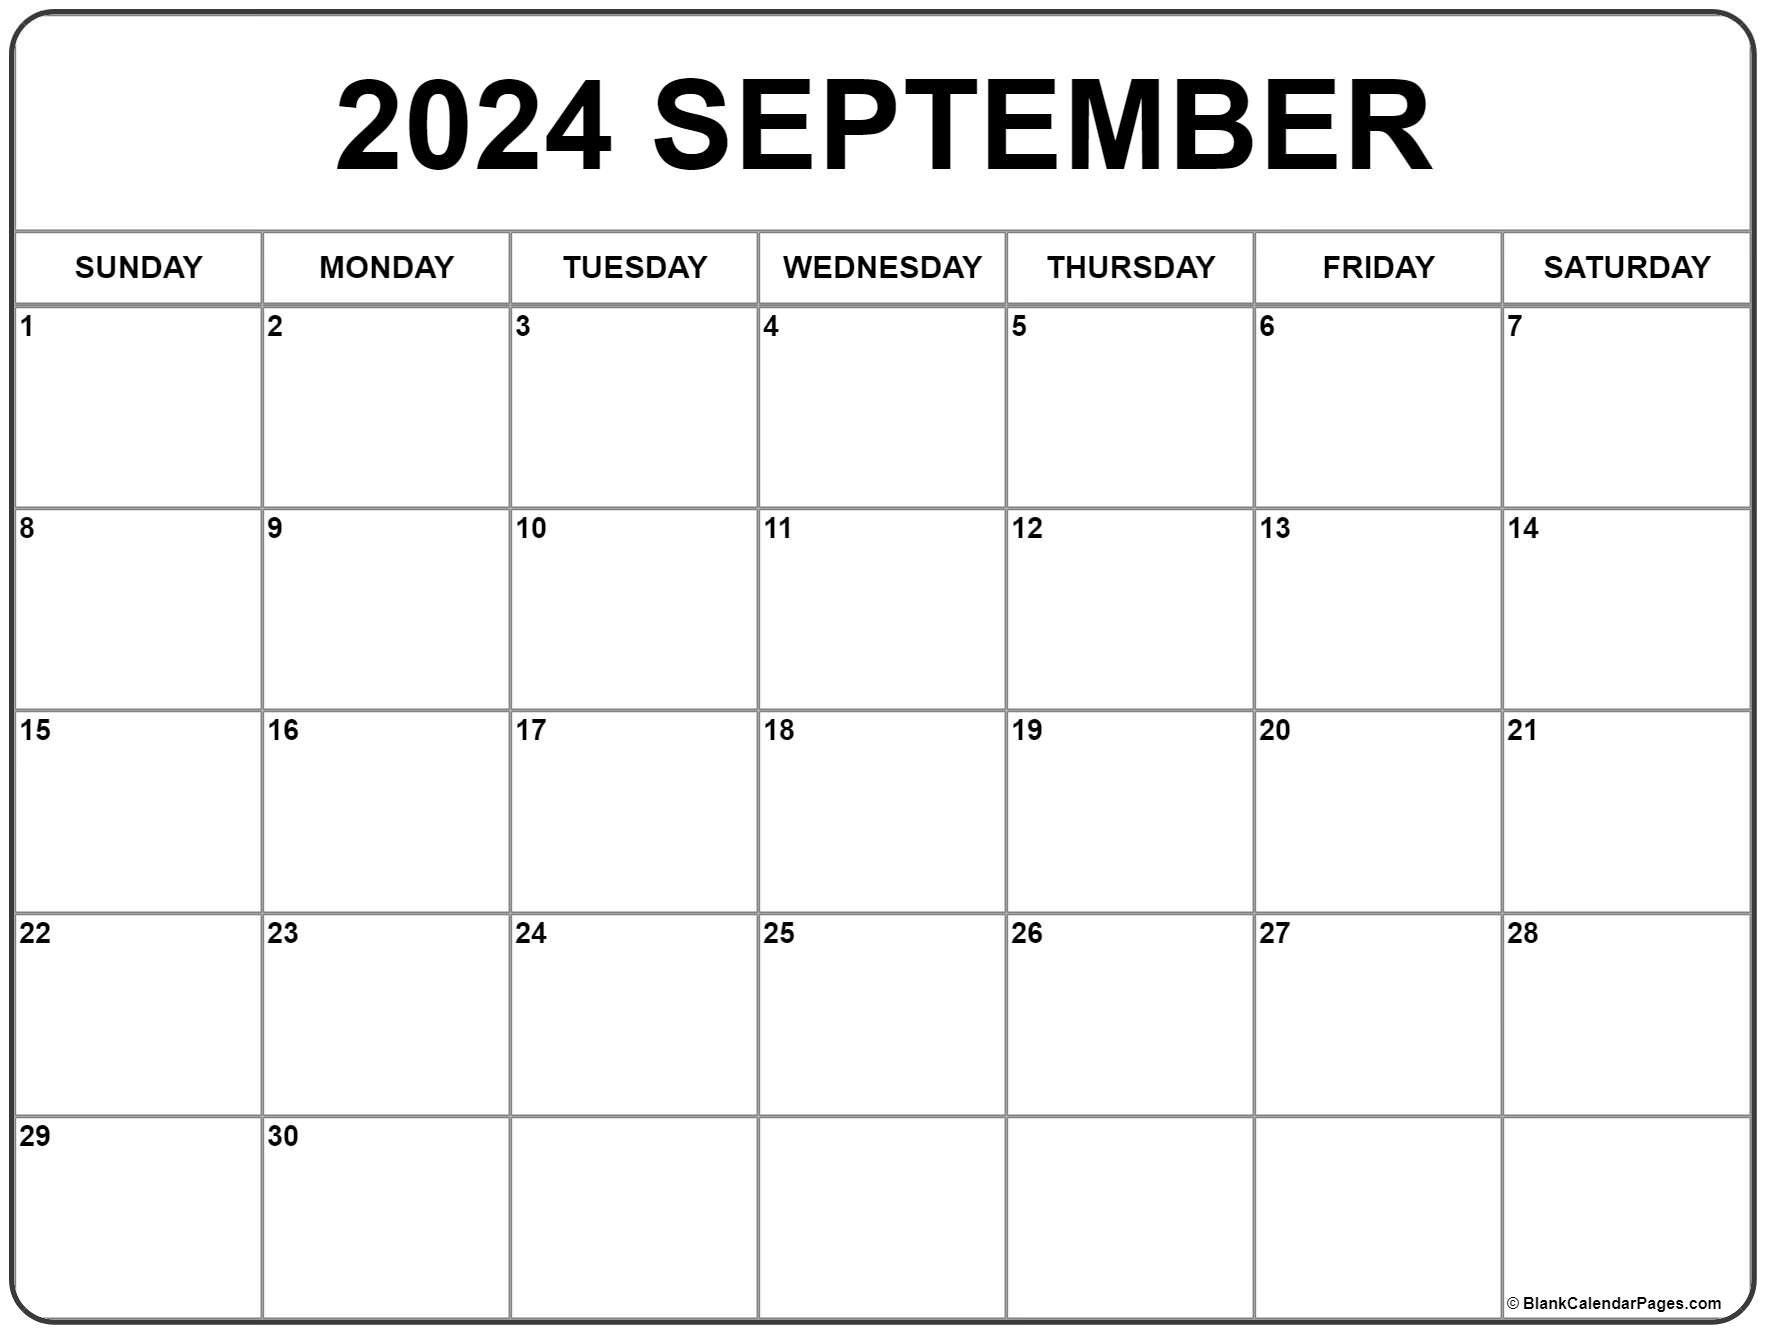 2021 Calendar September September 2021 calendar | free printable monthly calendars